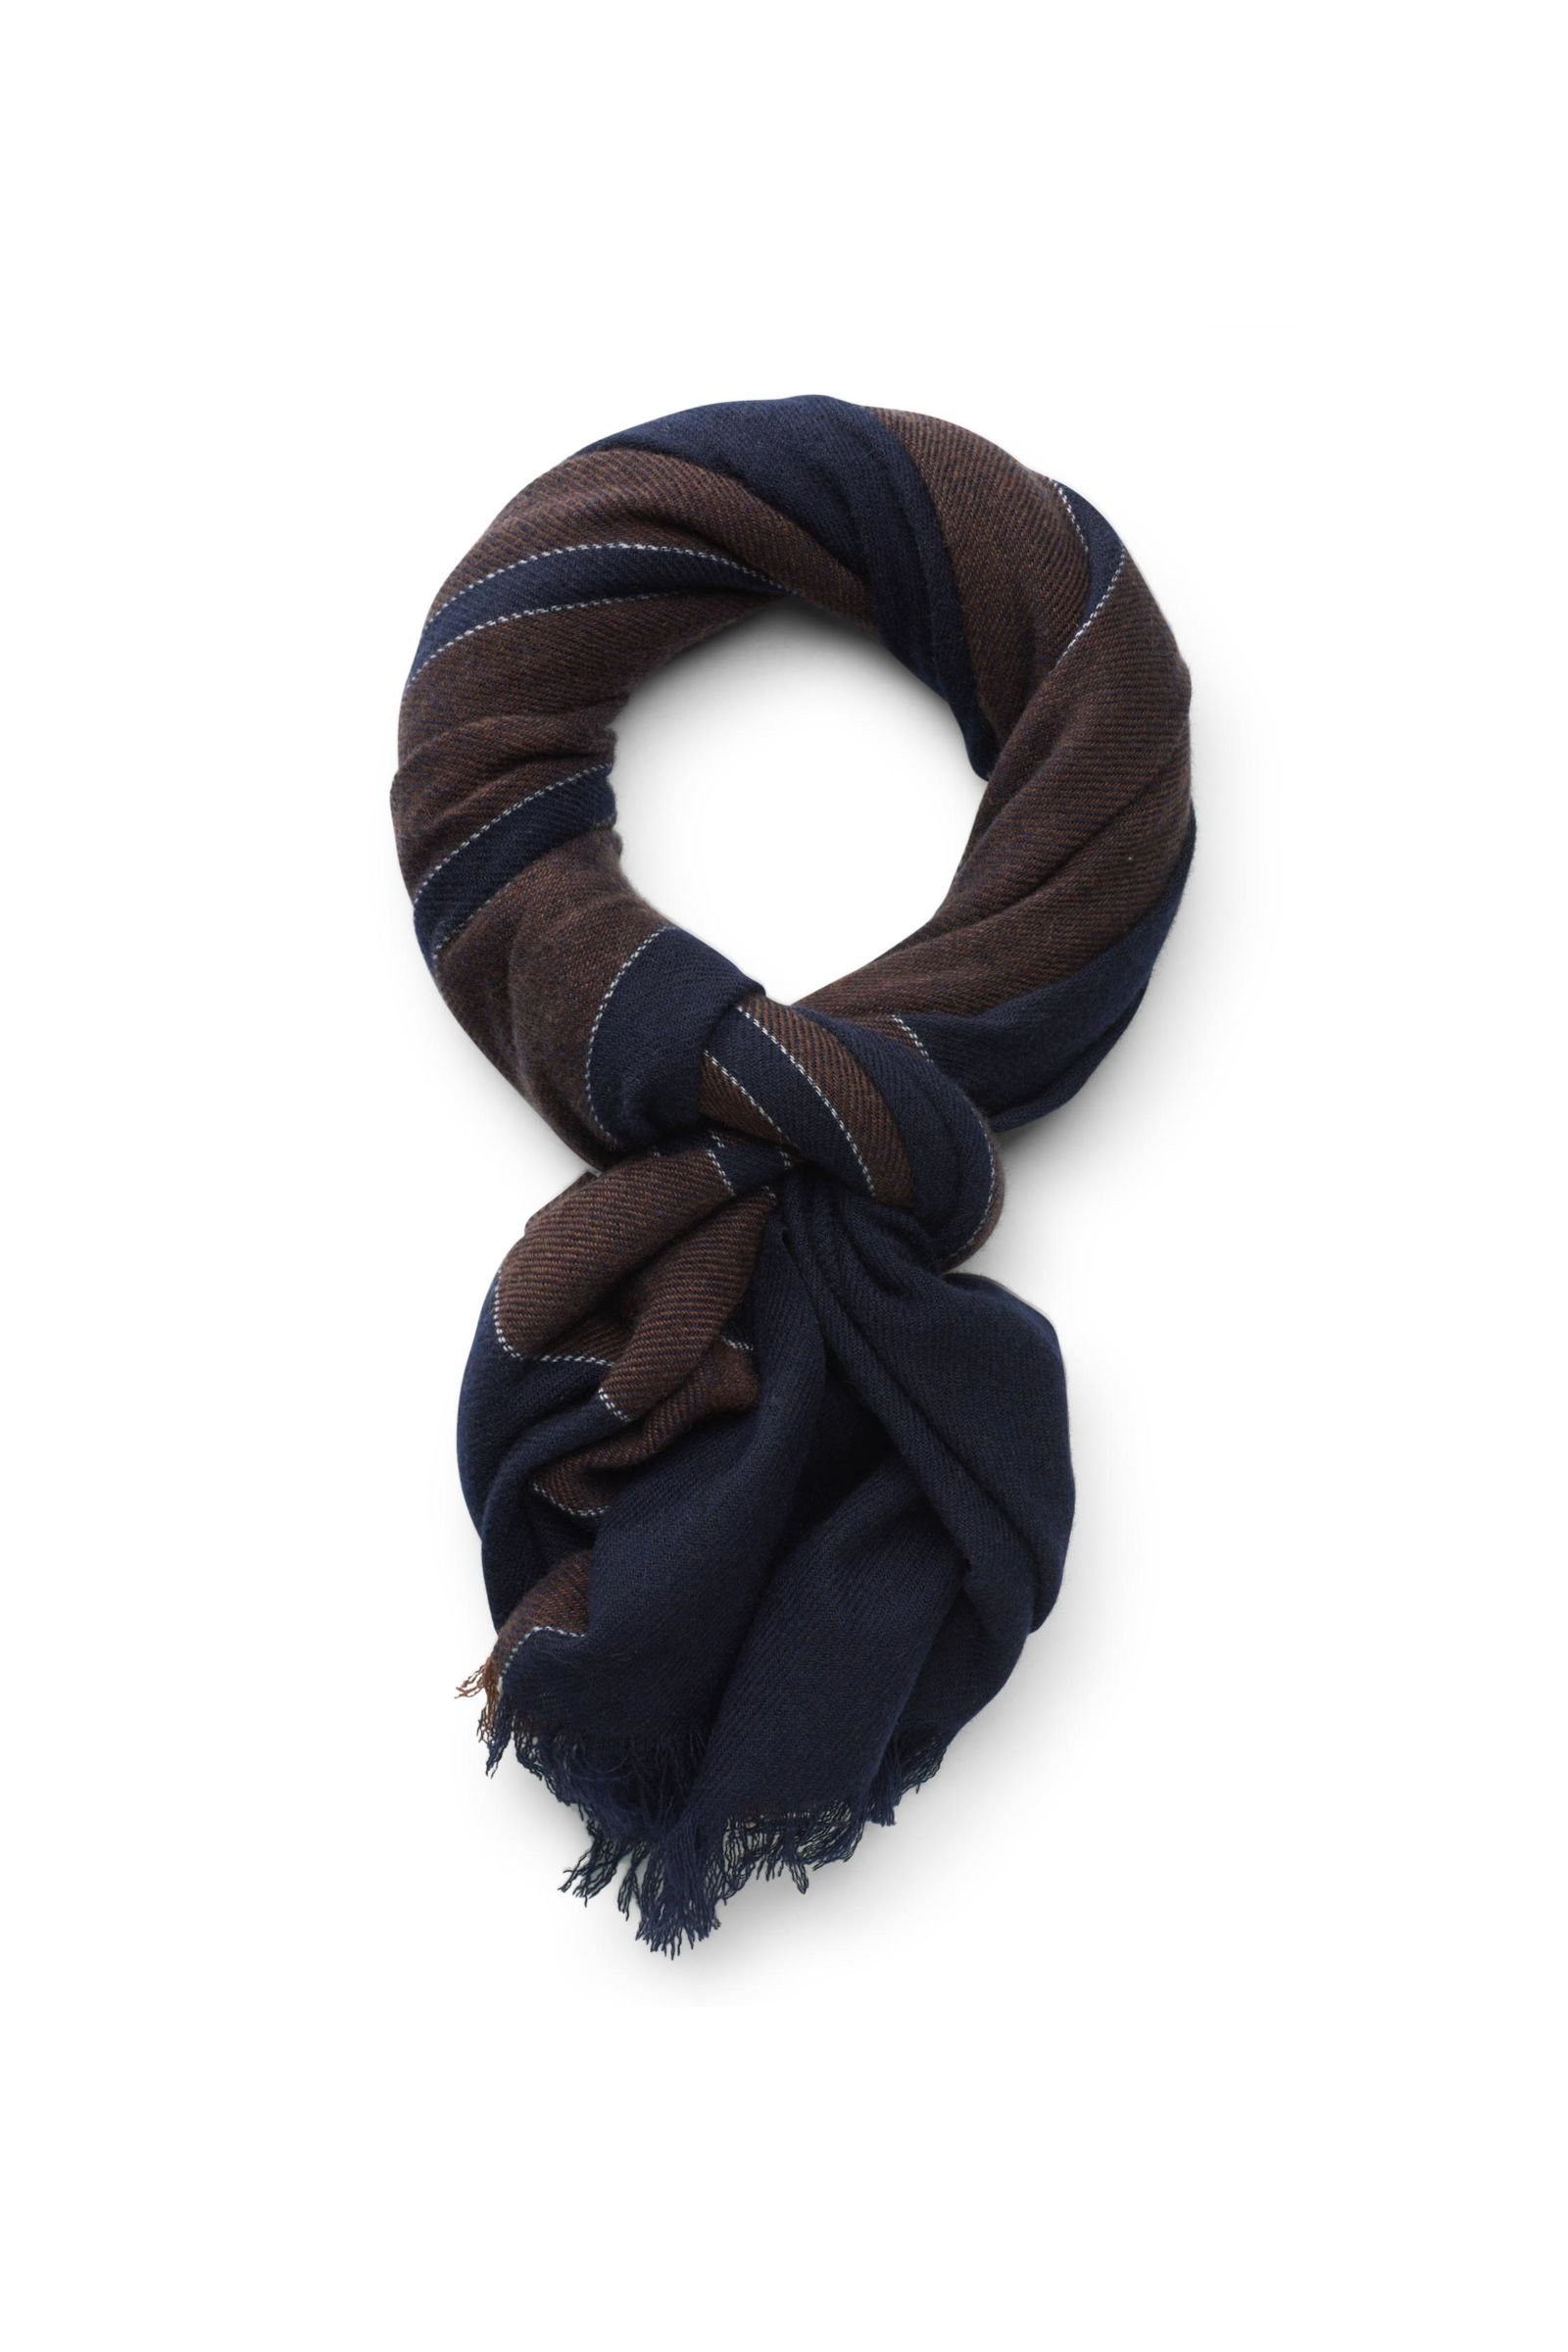 Cashmere scarf navy/brown